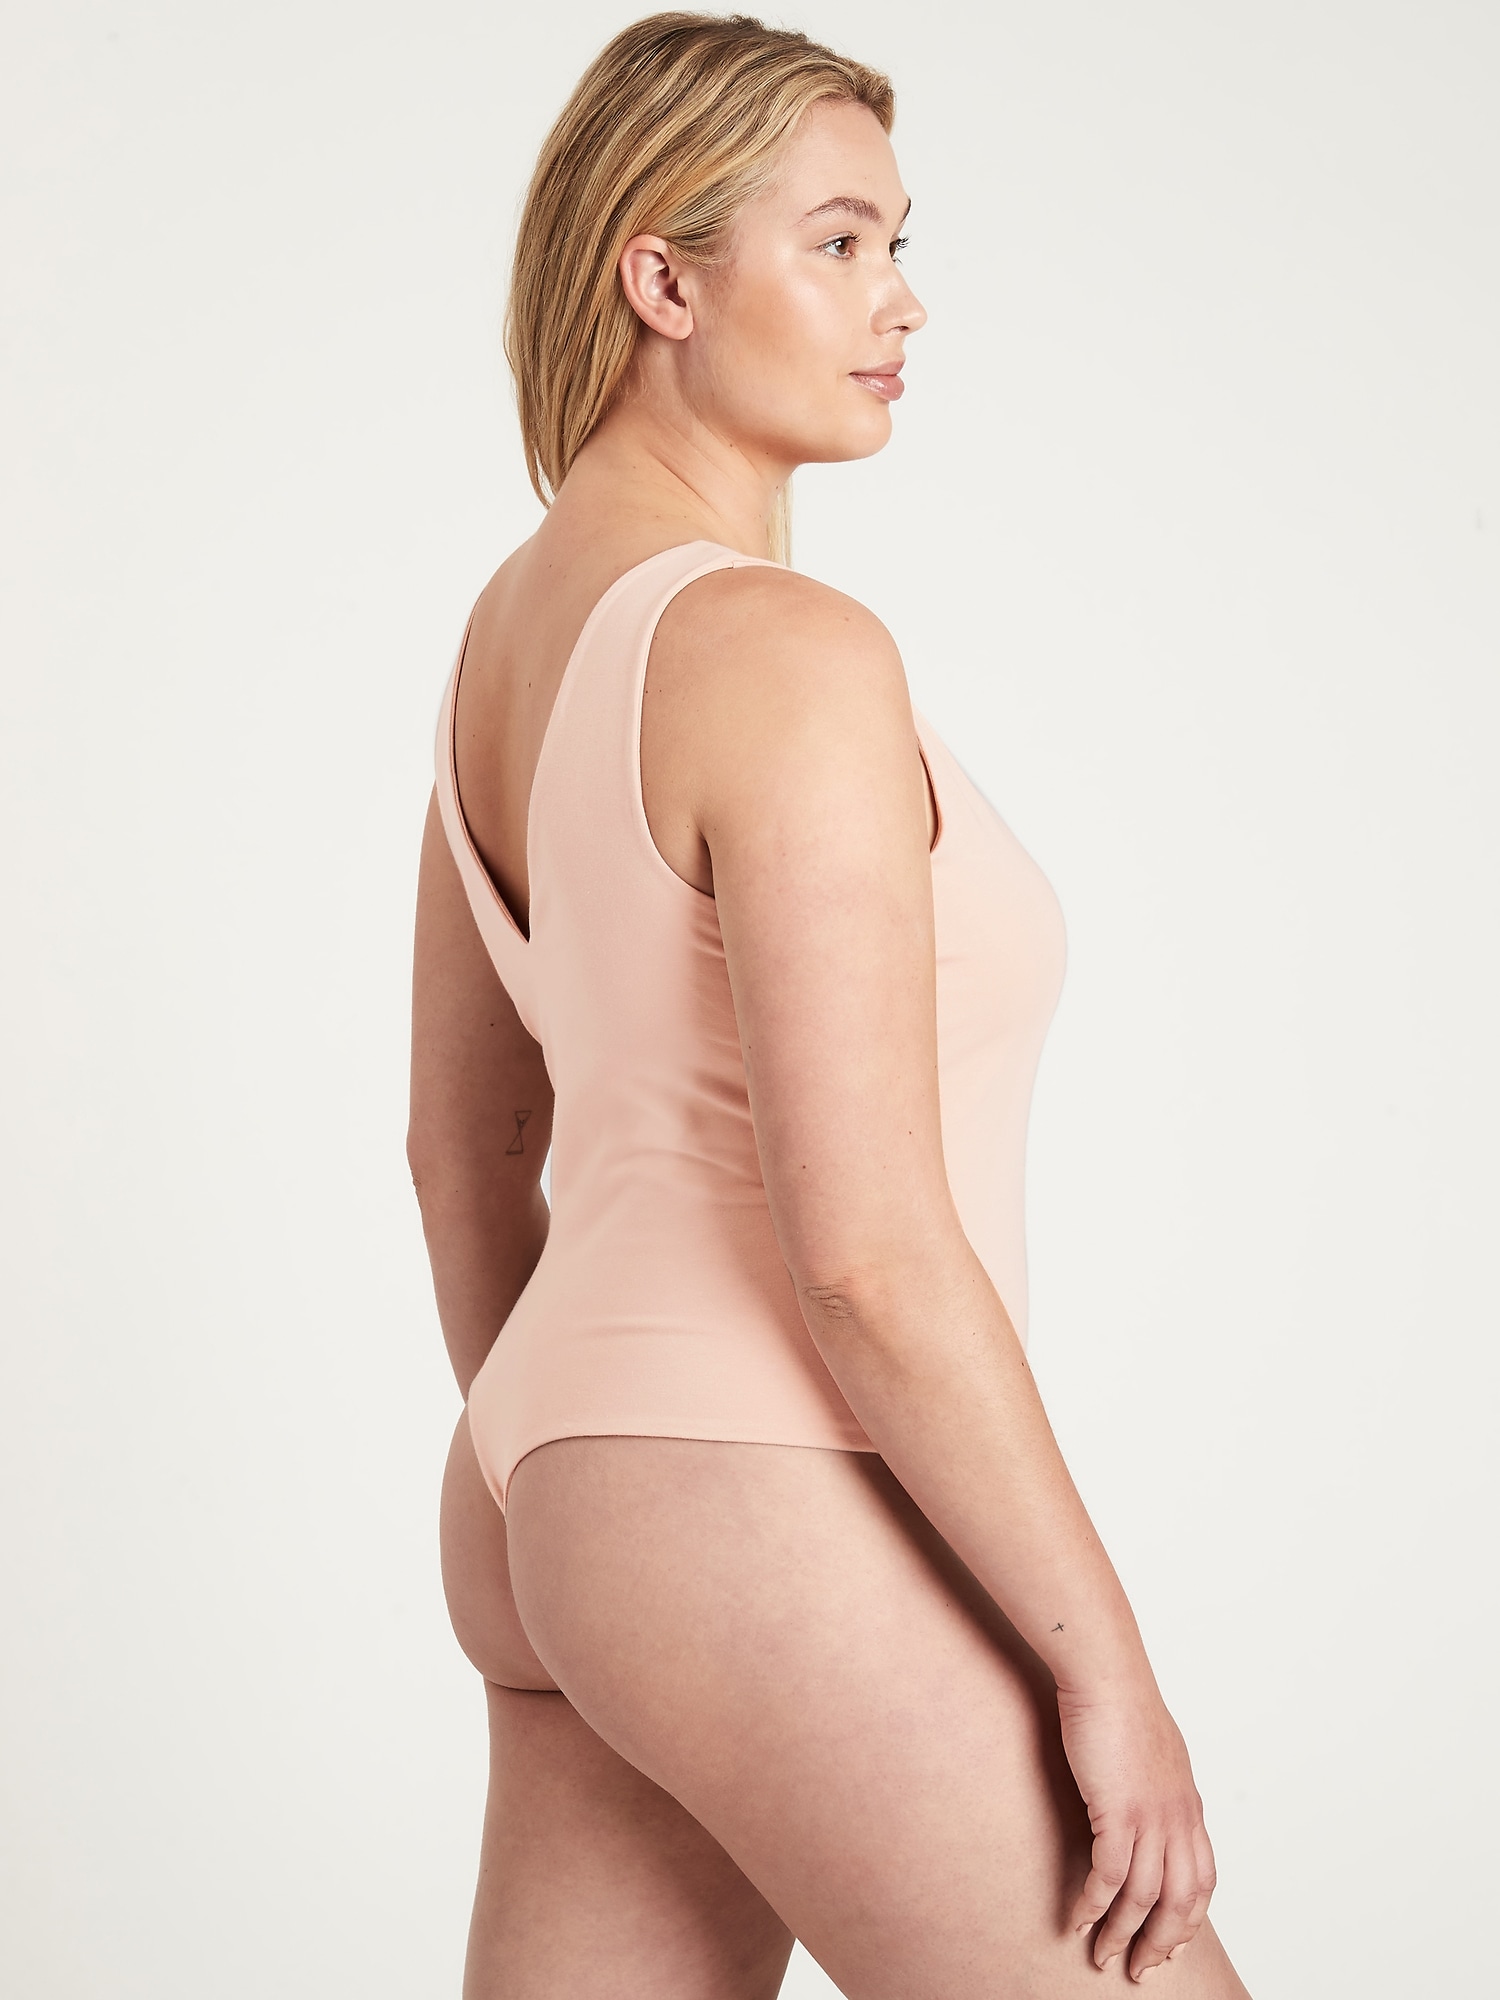 Ballet-Back Bodysuit with Built-In Bra, Banana Republic